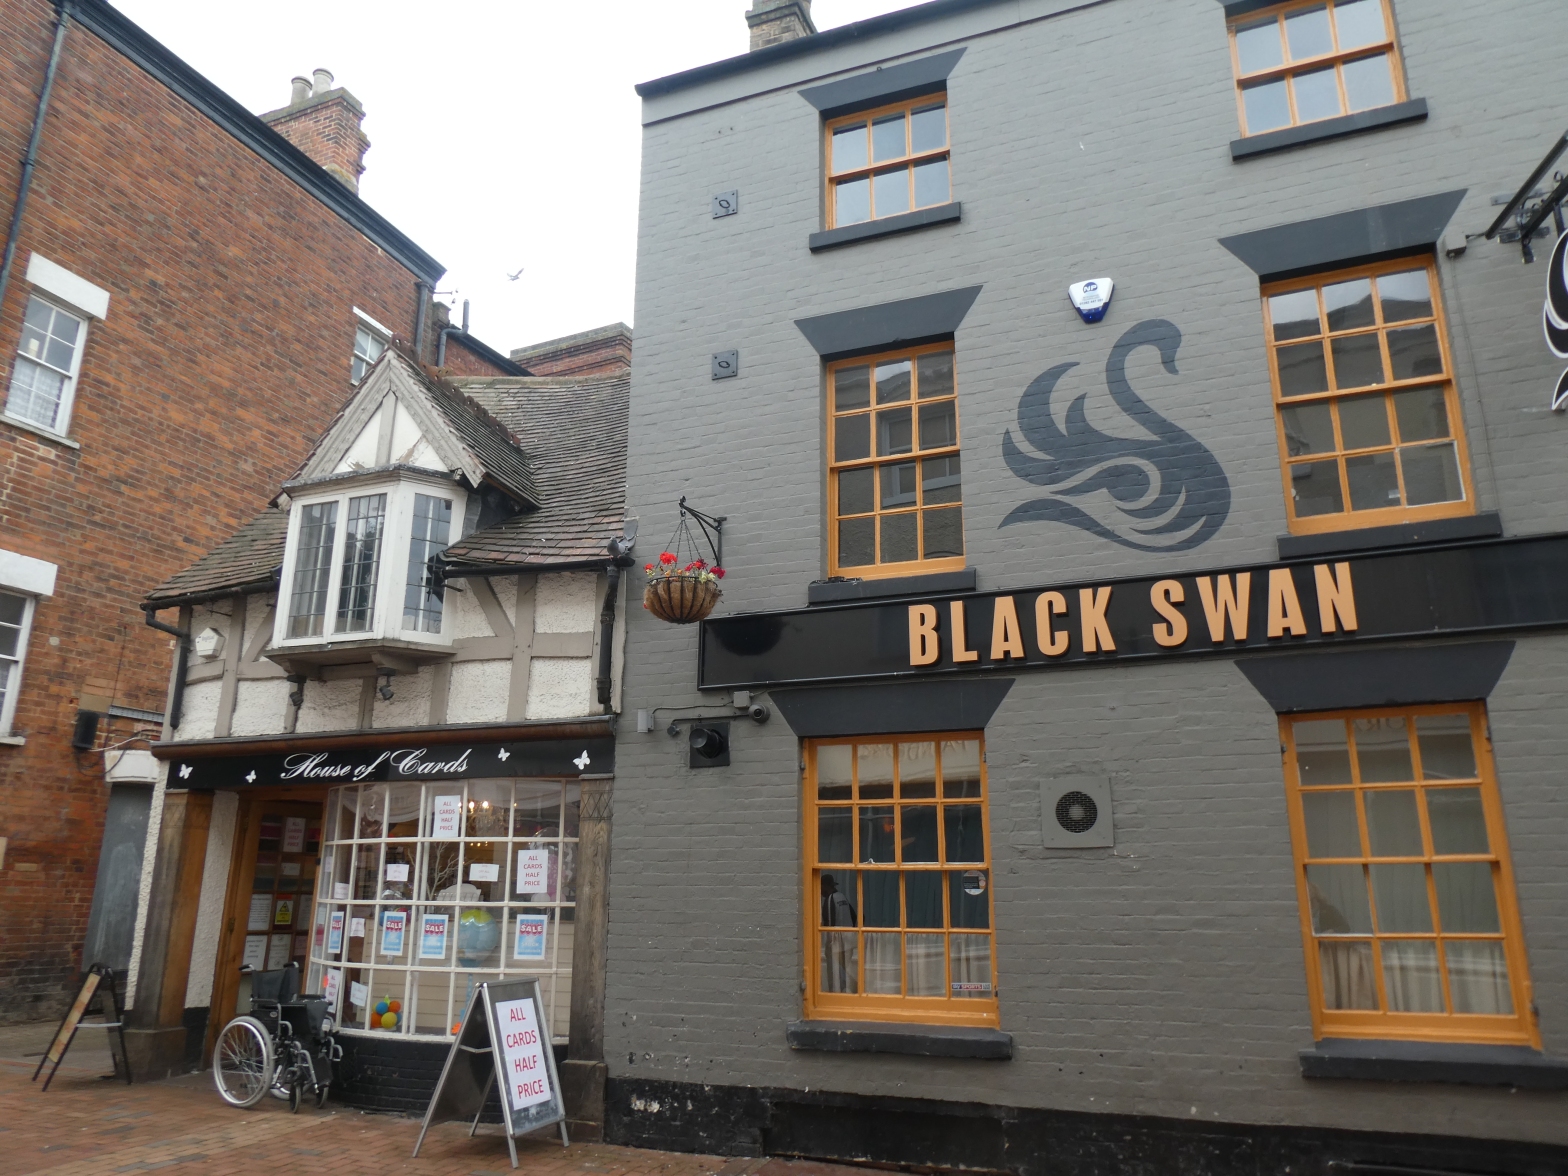 The Black Swan pub 14th century house Chapel Street Rugby Warwickshire